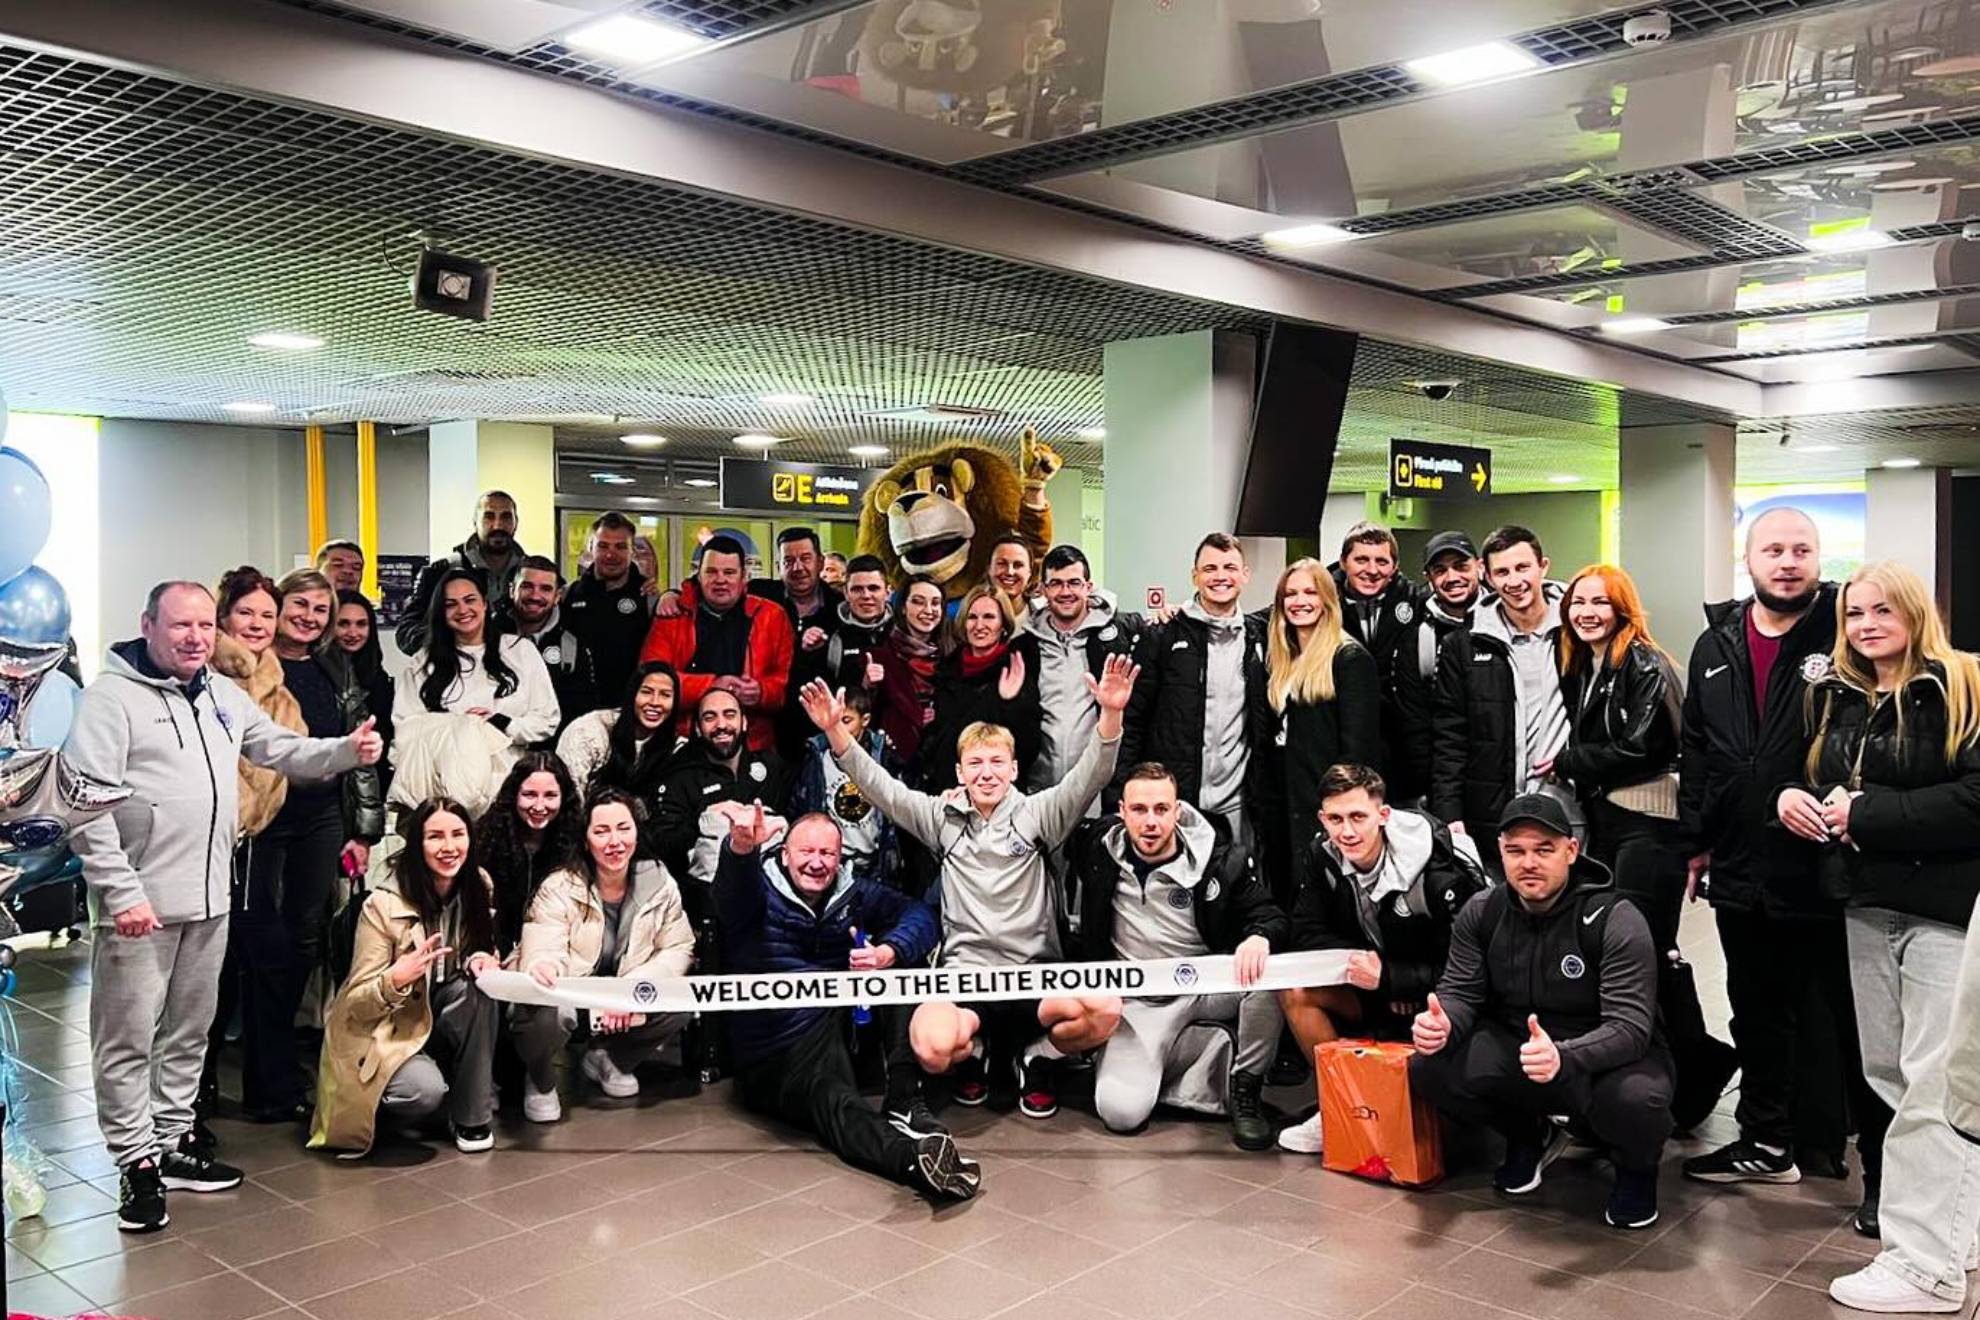 El Riga Futsal de Ricardinho celebra su clasificacin para la Eltie Round